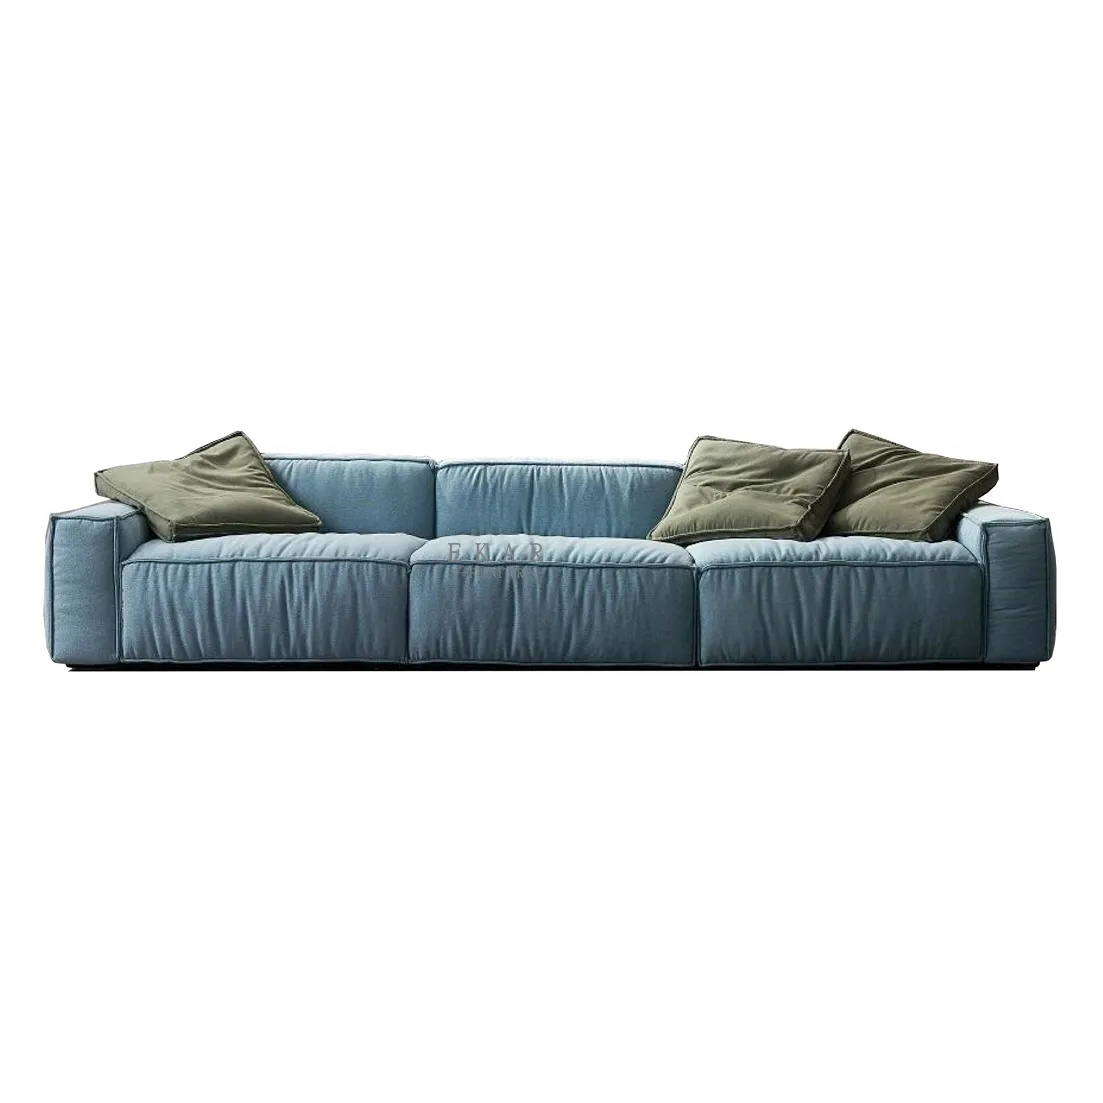 Hot Sale Living romm Sofas Stoff Schnitts ofa Set Möbel Daunen füllung Modular Free Combination Couch Anpassbare Sofas